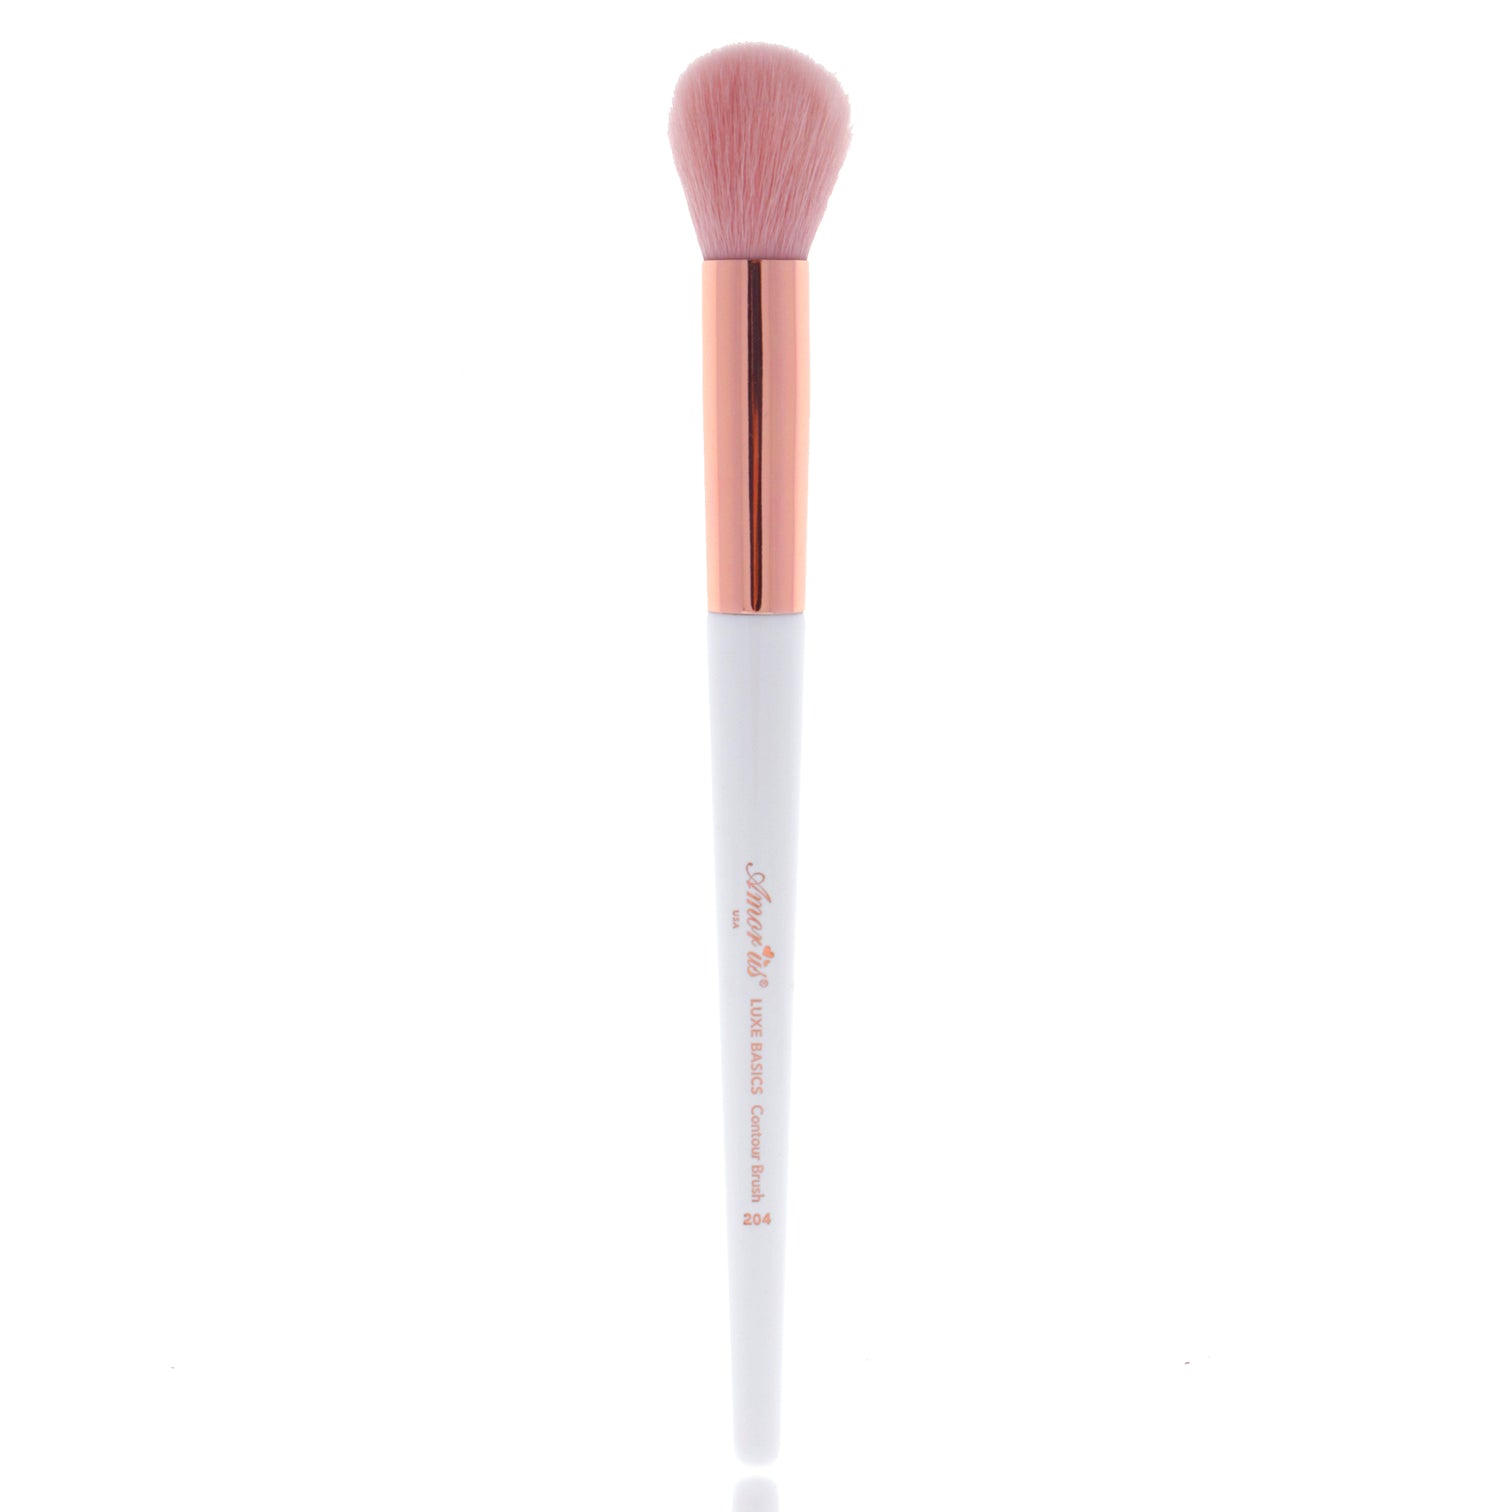 Luxe Basics Brush Collection, Makeup Brushes | Amorus USA